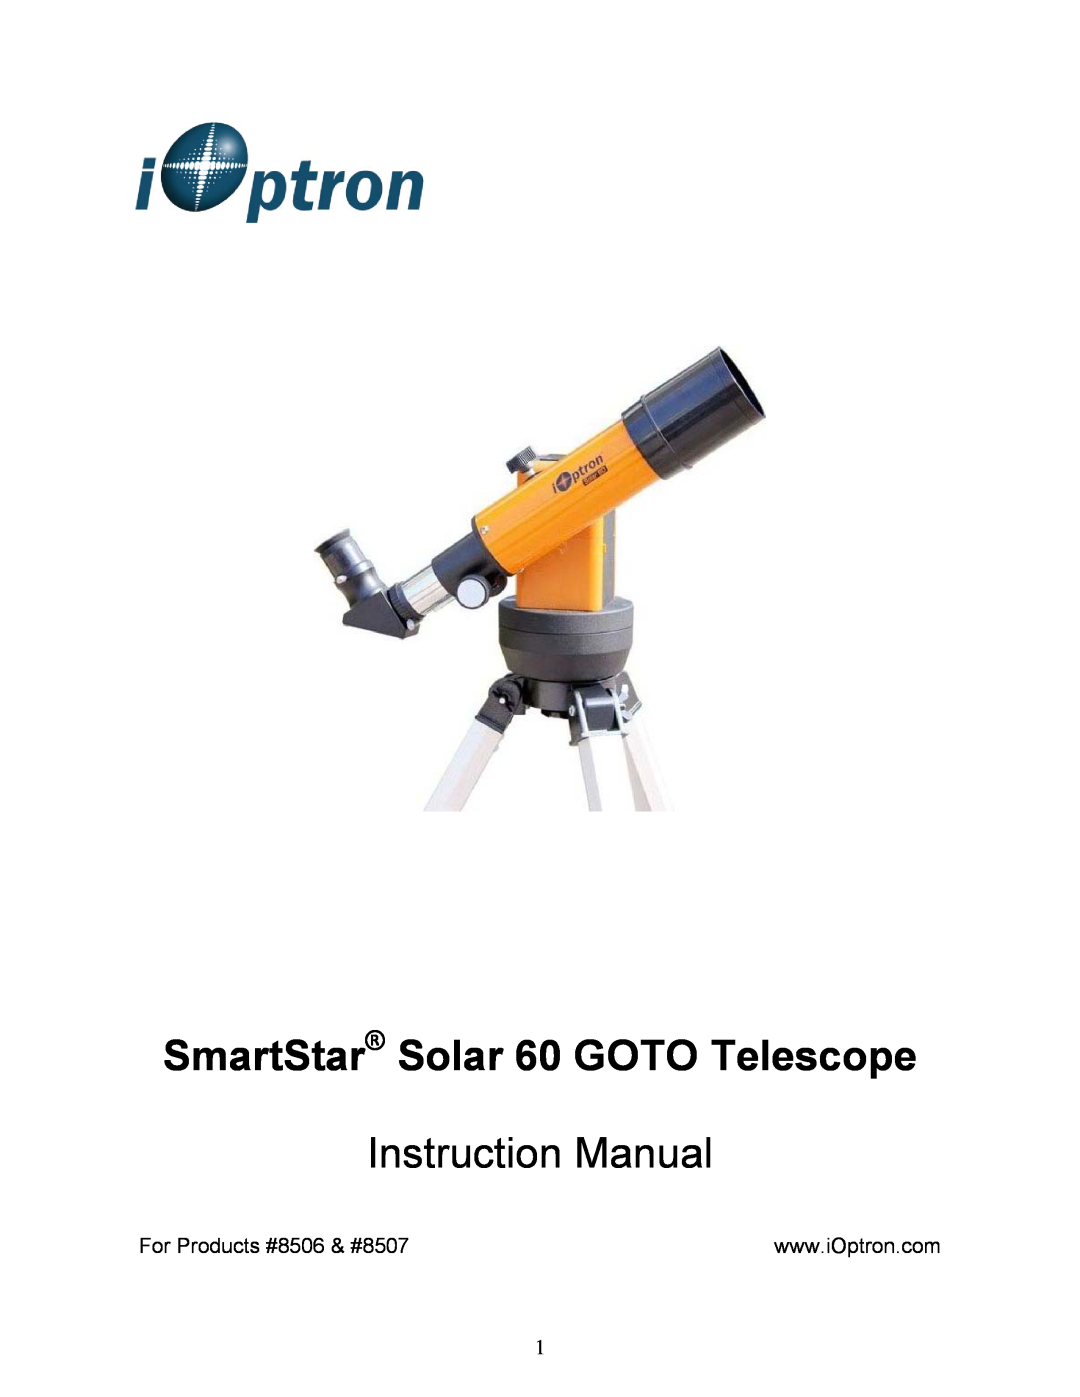 iOptron quick start Quick Start Guide, Package Contents, SmartStar Solar 60 GOTO Telescope, #8506, Features 